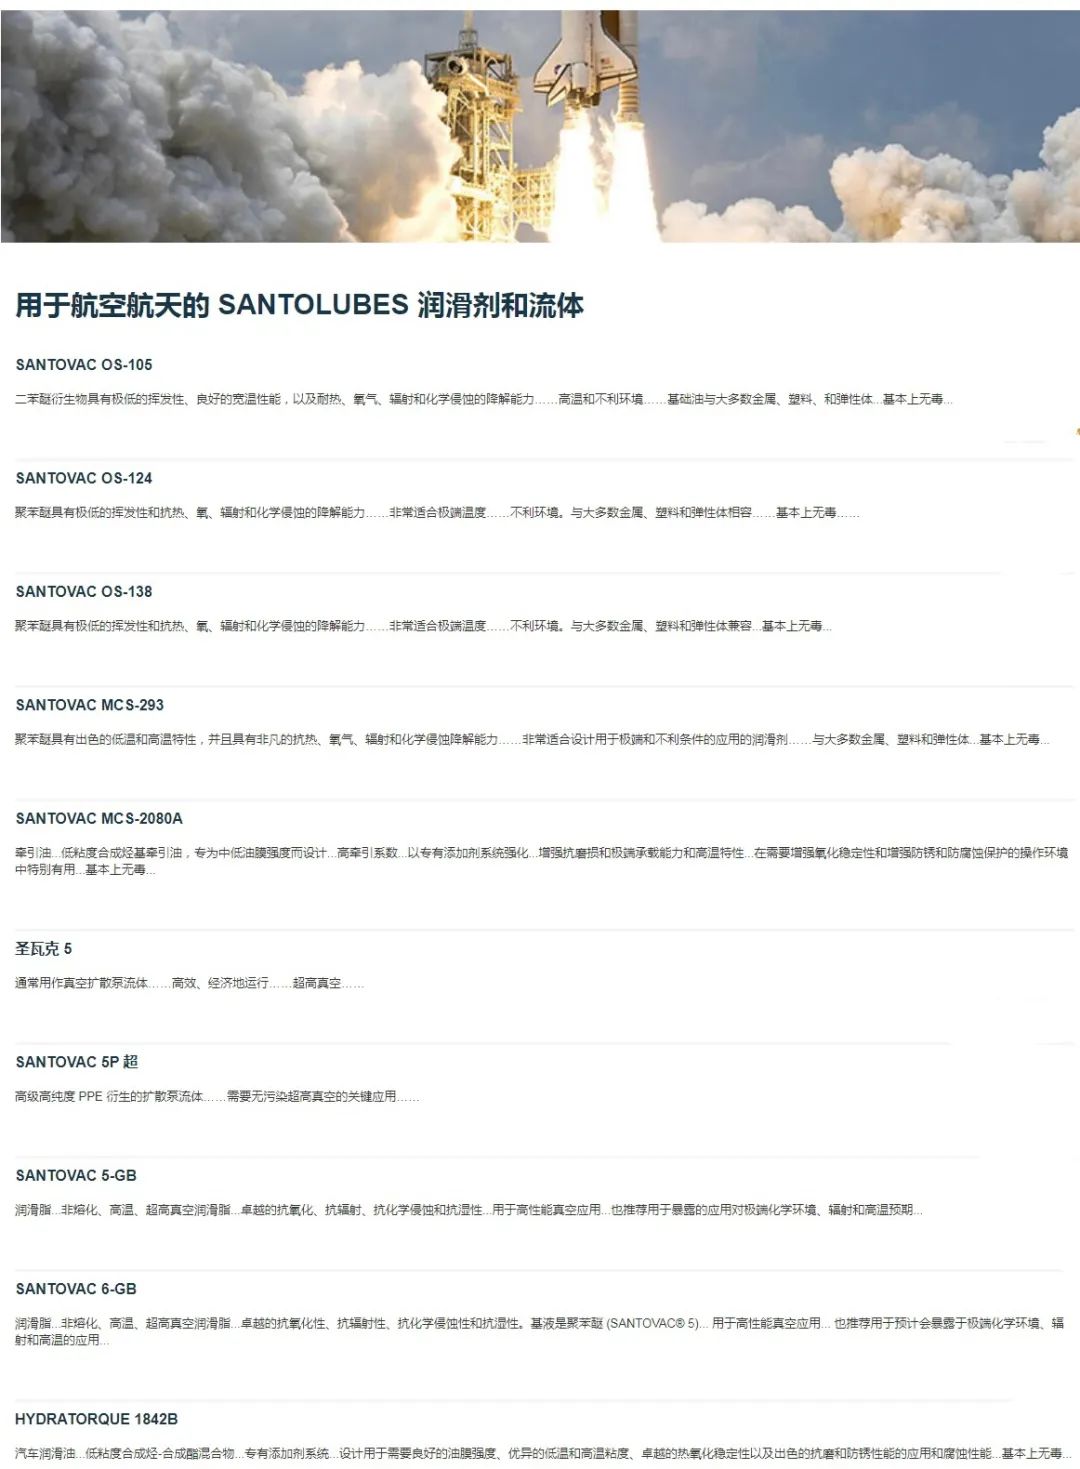 SantoLubes LLC